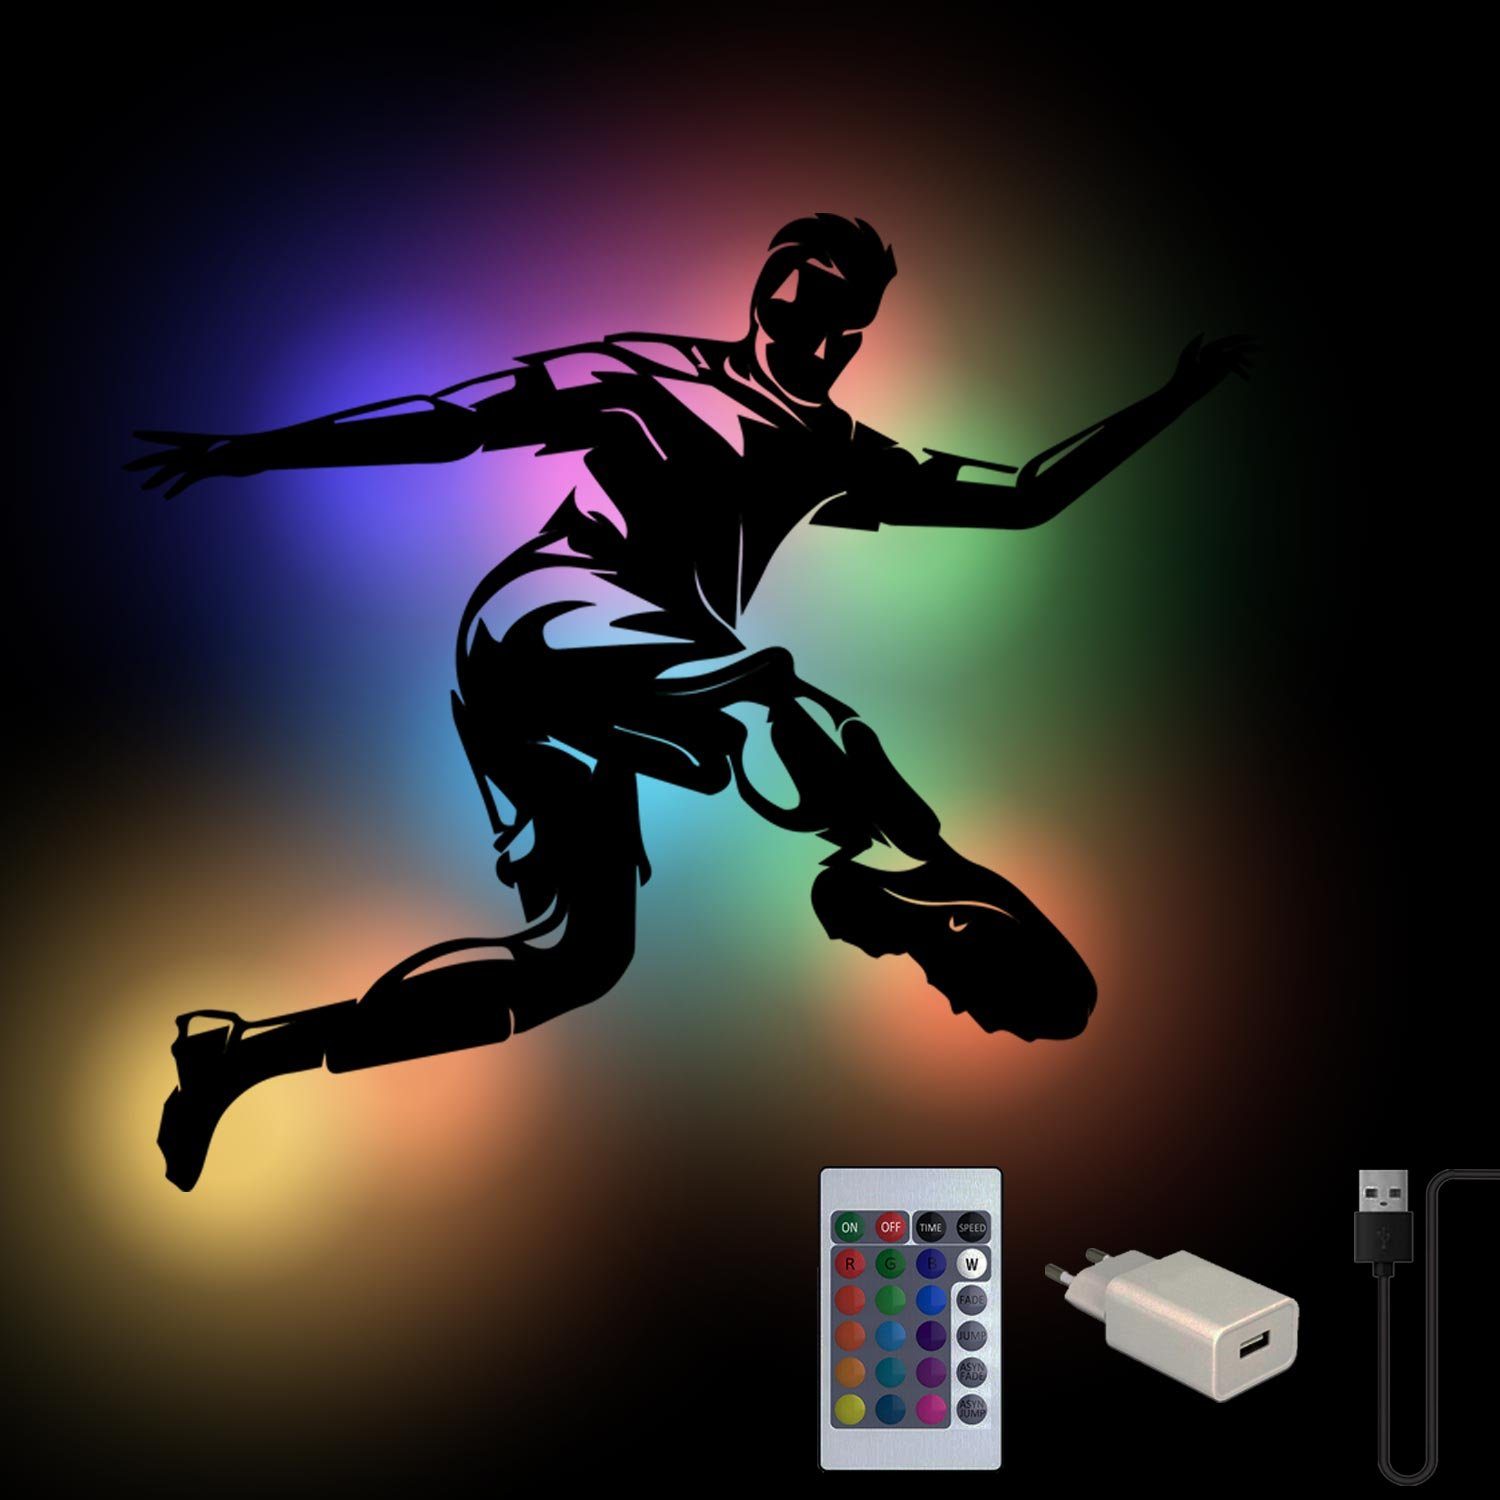 Kicker, Wand fest Fußball Schwarz Farbwechsel, Deko Dekolicht LED Namofactur RGB Farbwechsel integriert, LED